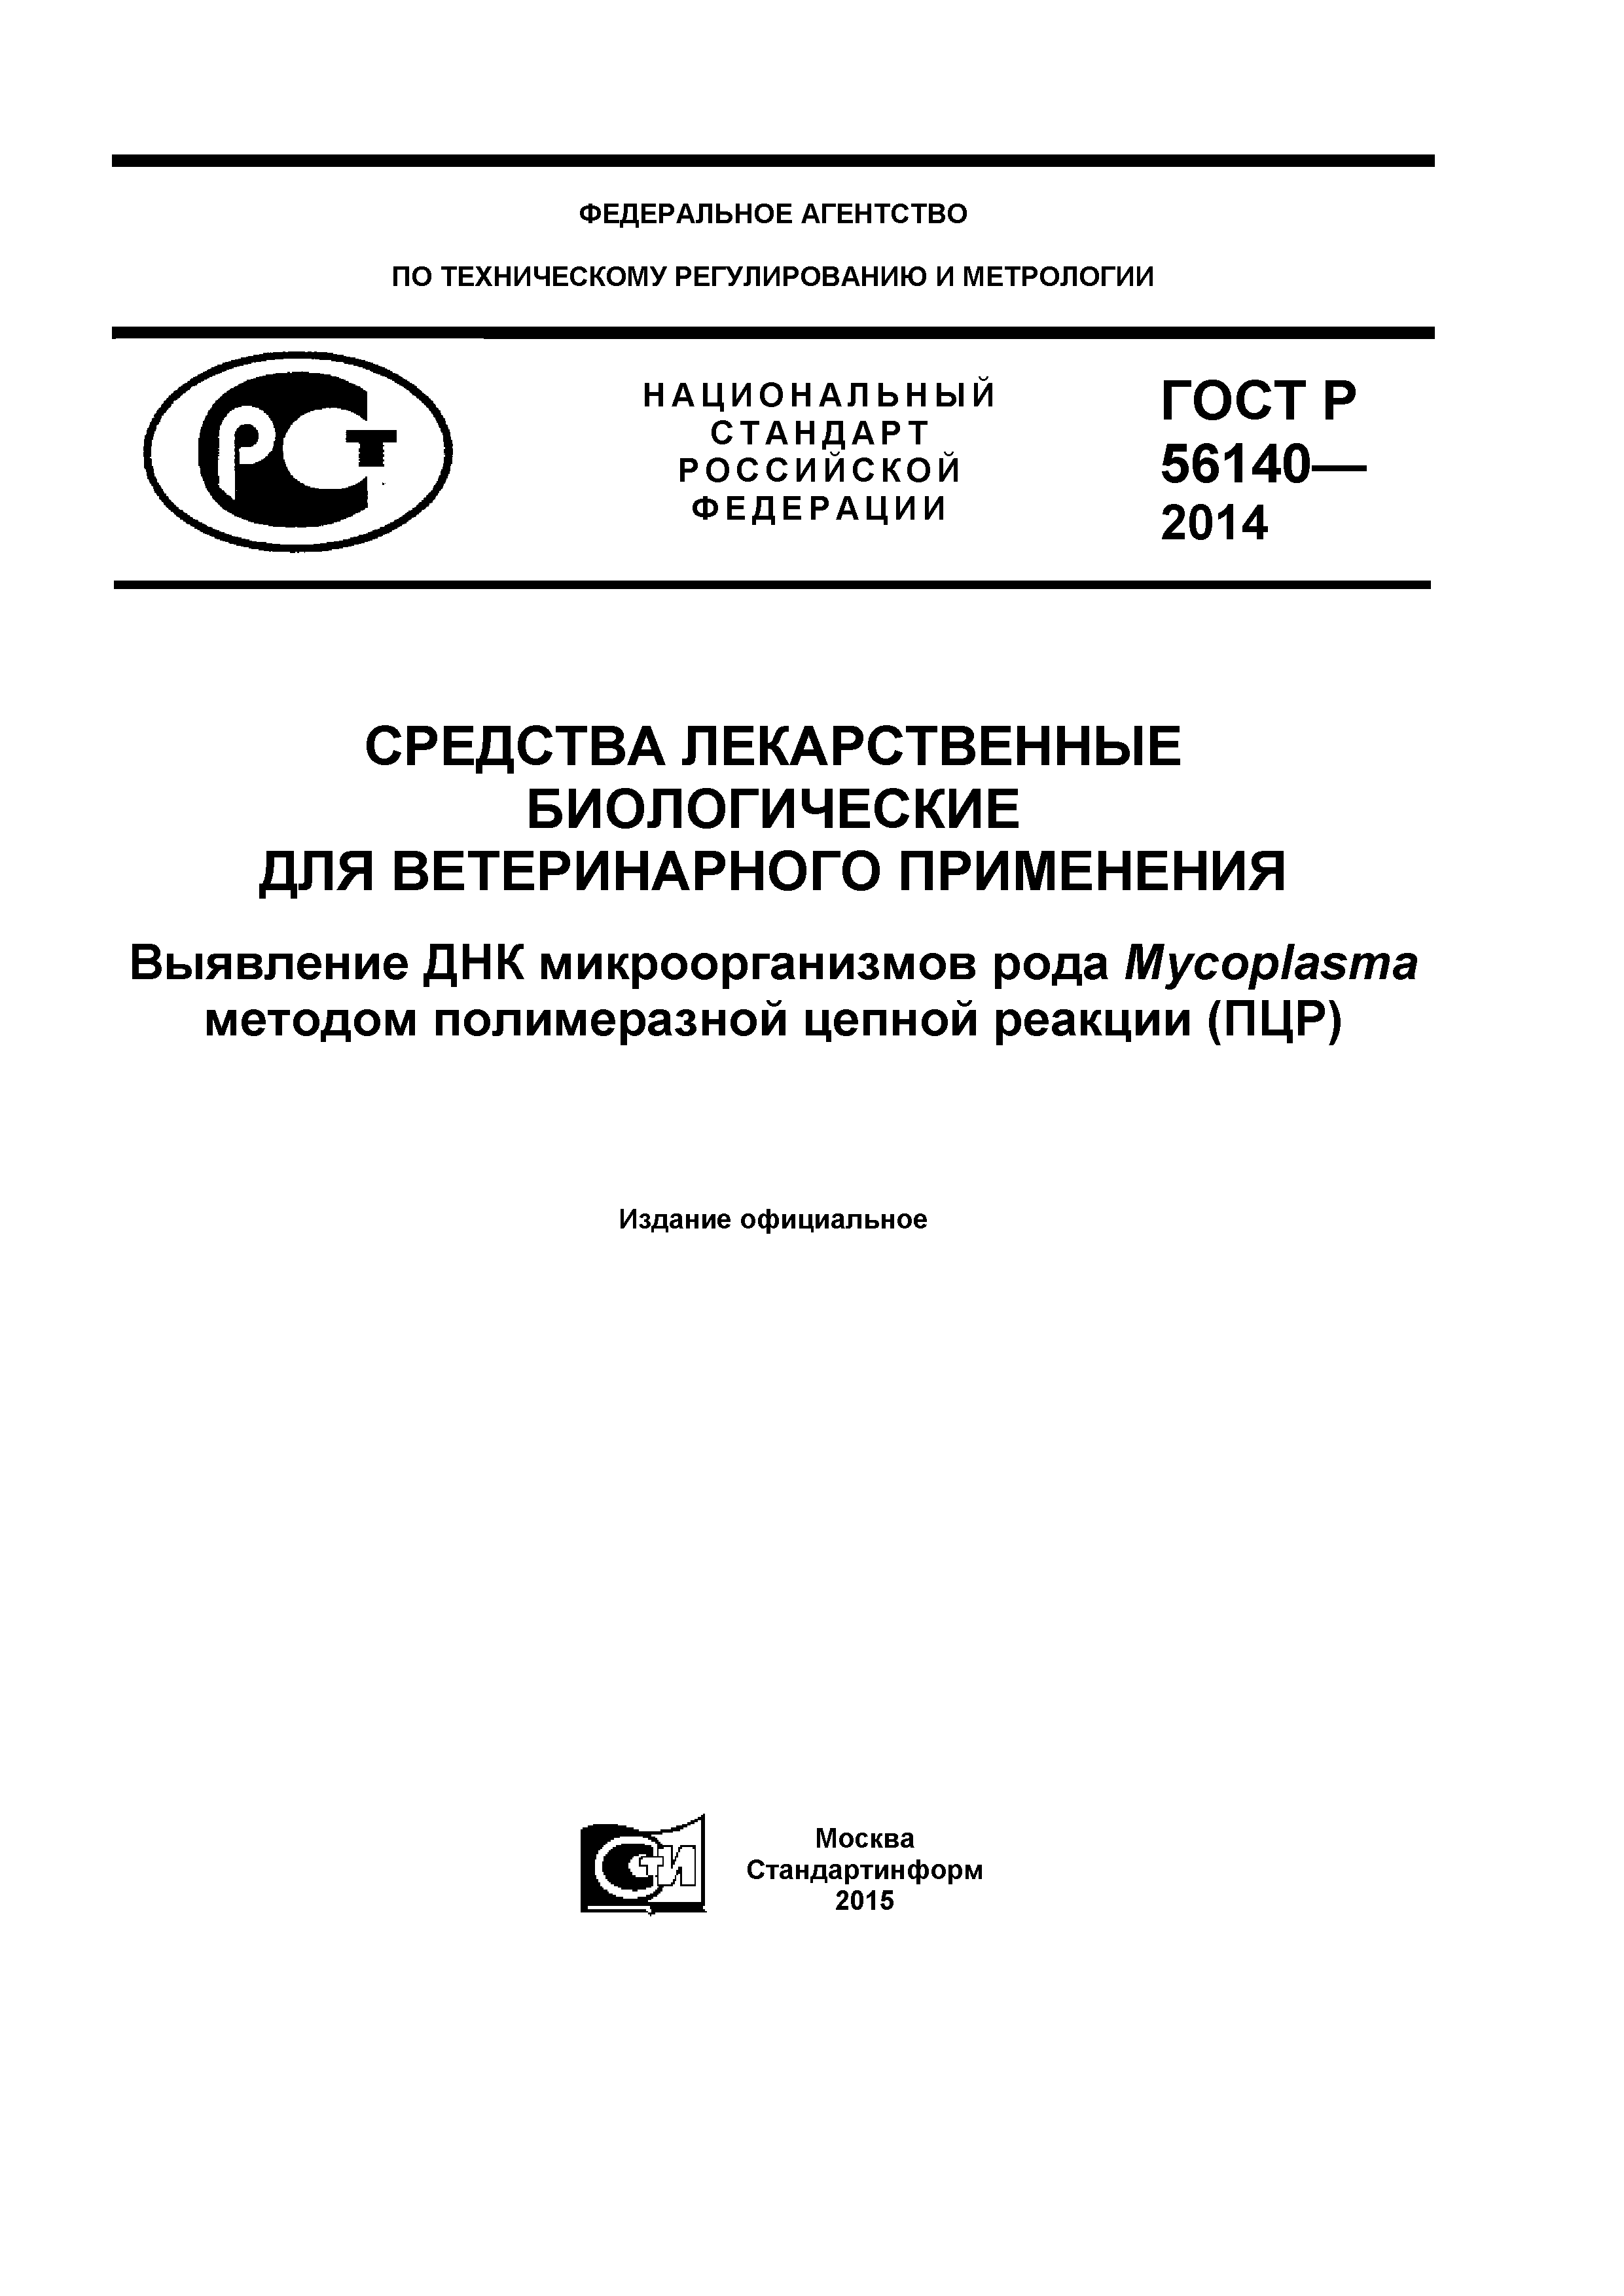 ГОСТ Р 56140-2014